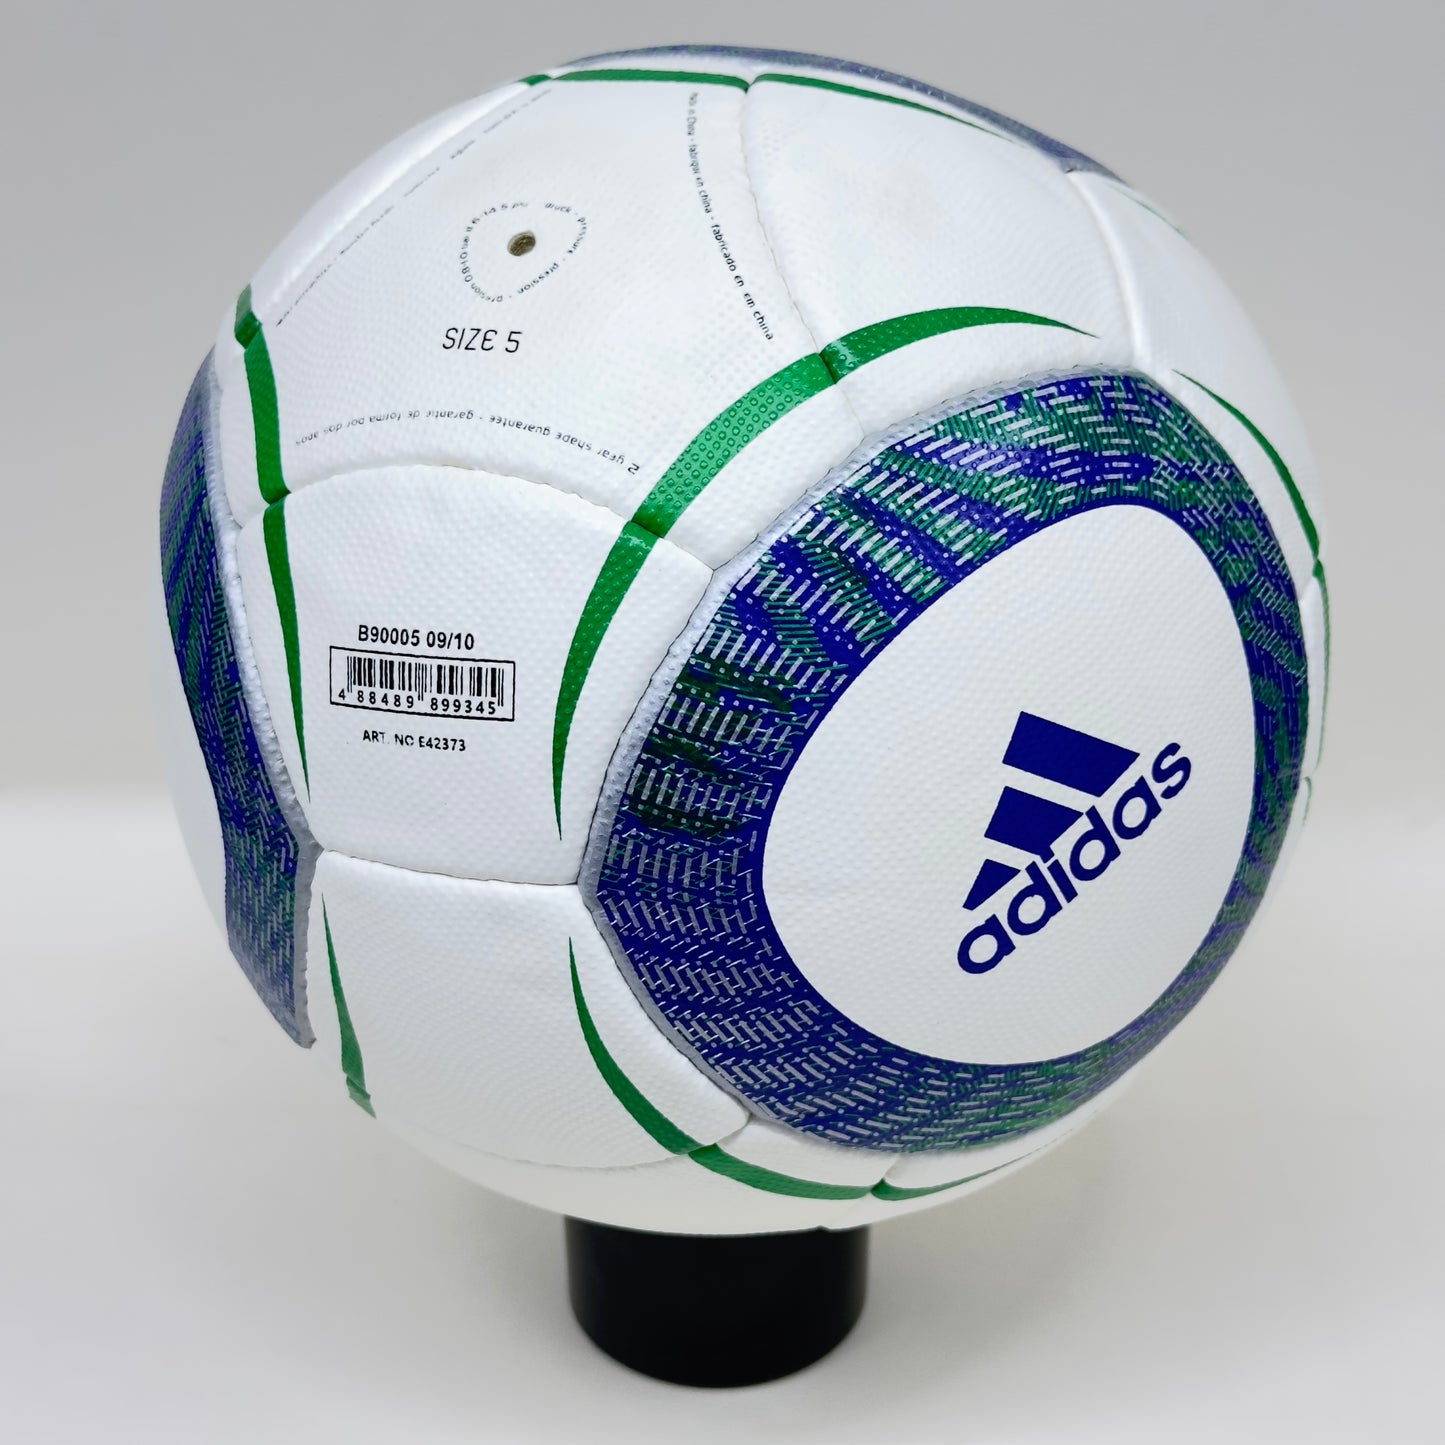 Adidas Jabulani MLS | 2010-2011 | Major League Soccer | Size 5 05